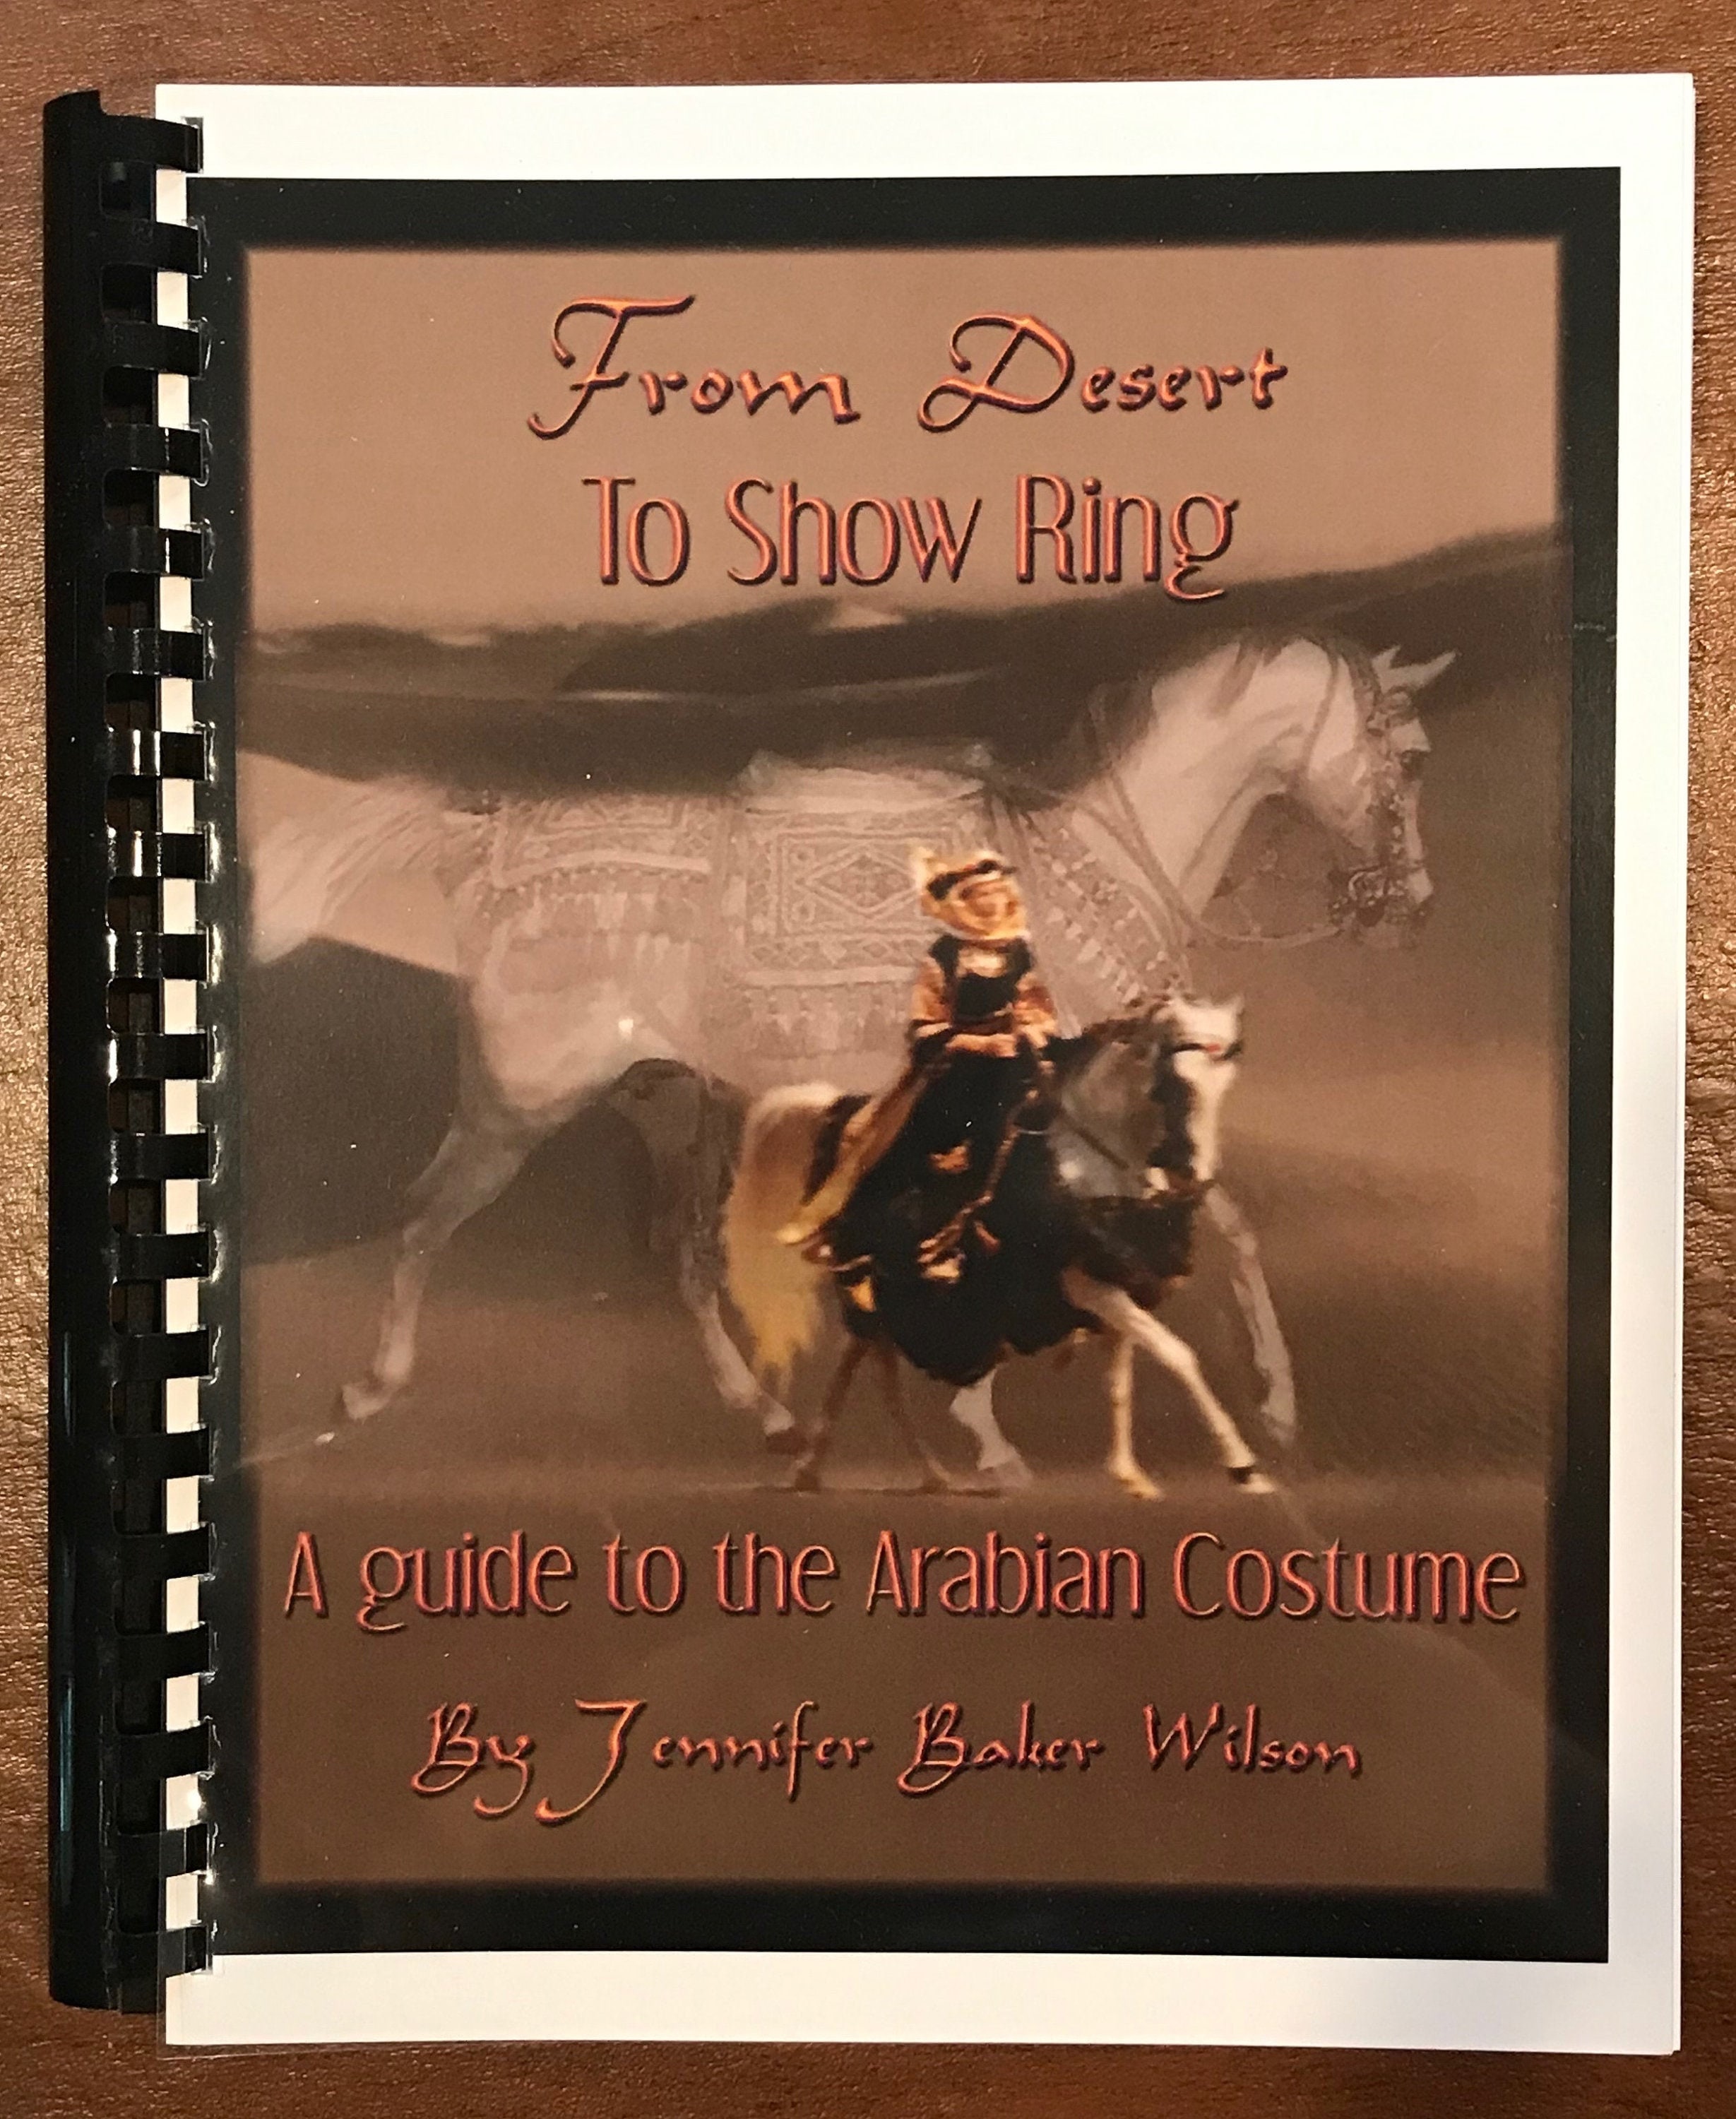 Model Horse ARABIAN COSTUME BOOK by Jennifer Baker Wilson -- From Desert to Show Ring: A Guide to the Arabian Costume